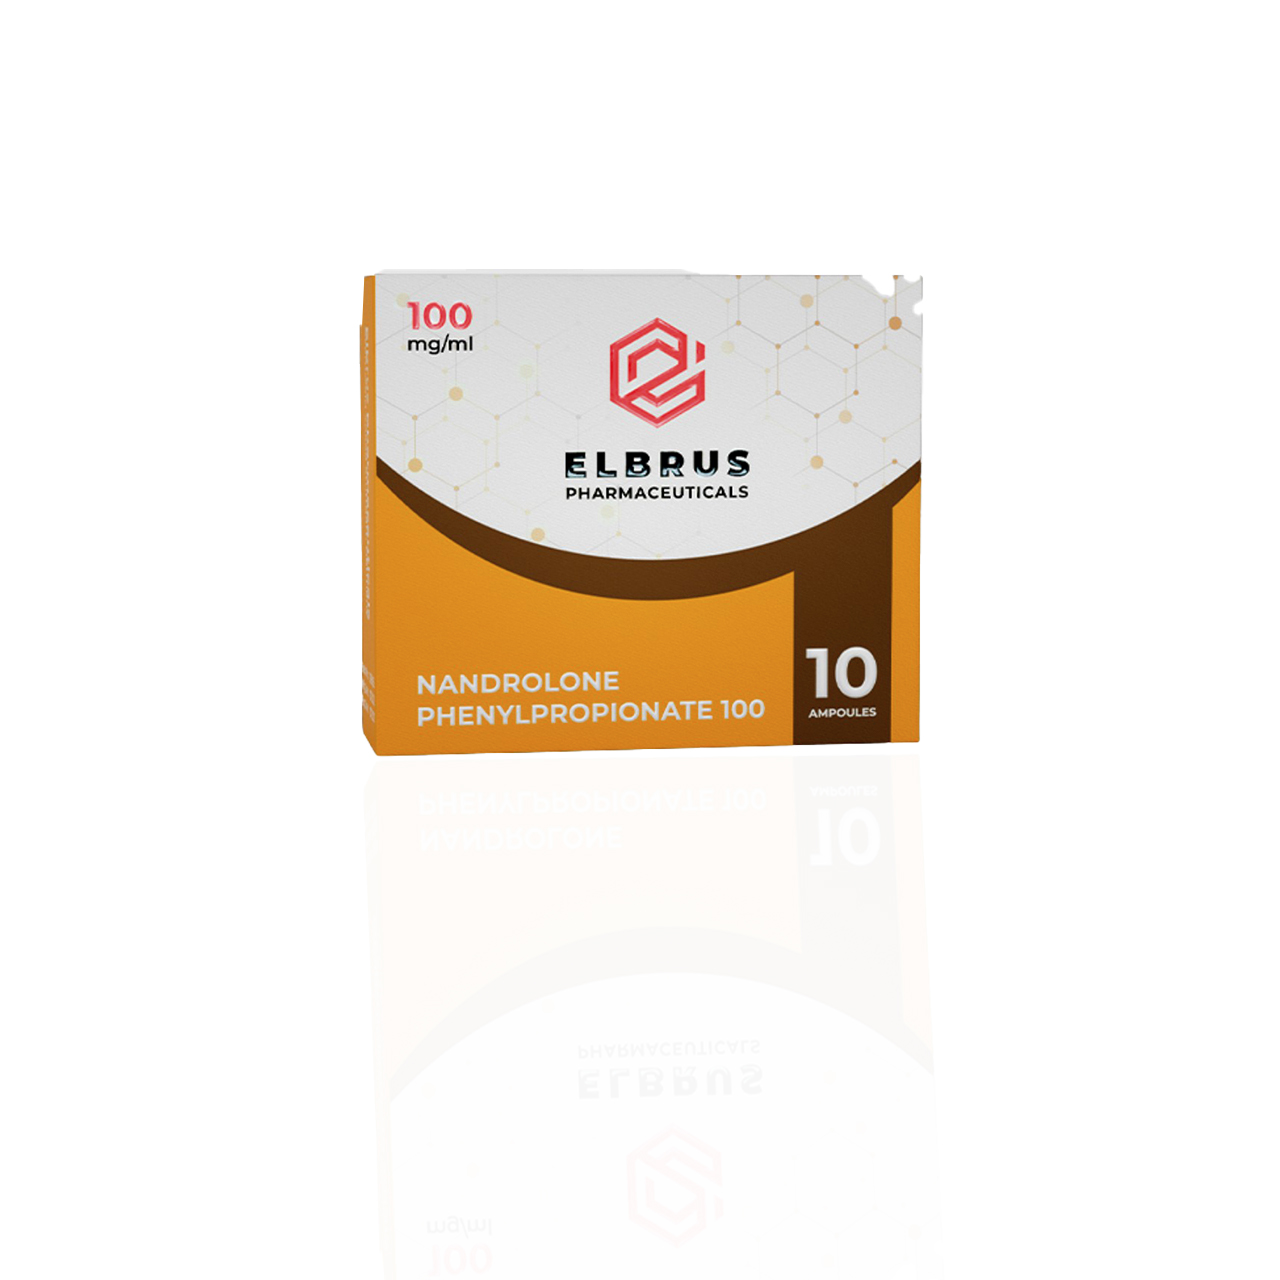 Nandrolone Phenylpropionate 100 mg Elbrus Pharmaceuticals Iniezione di steroidi